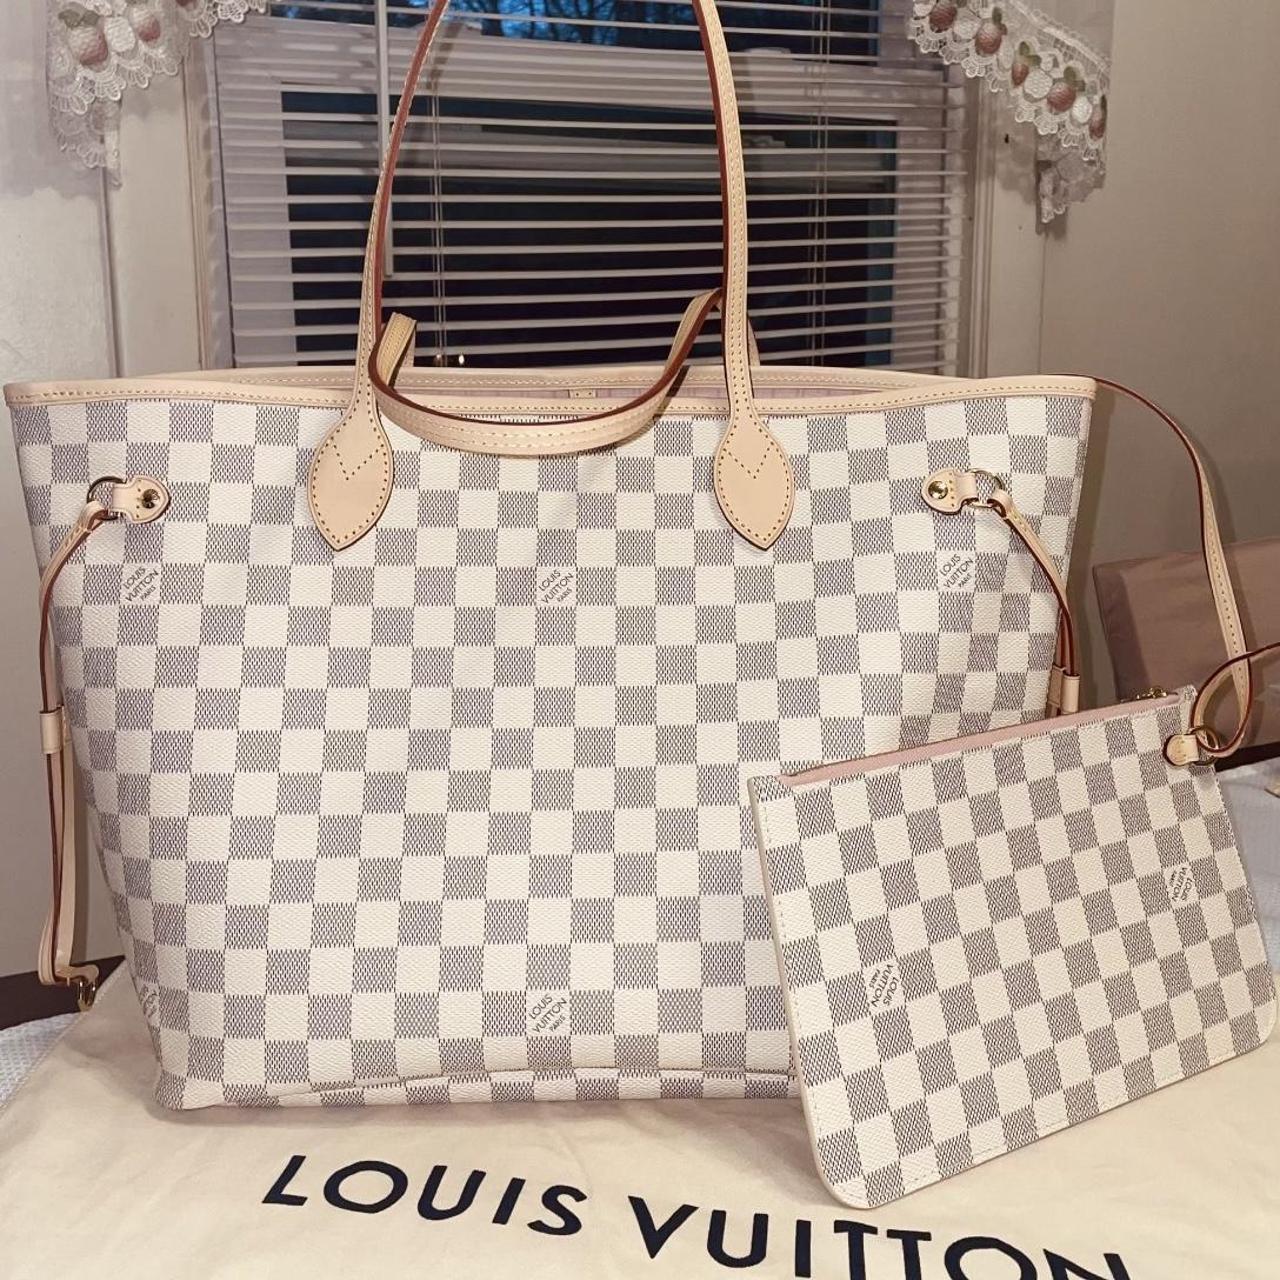 Louis Vuitton “Neverfull MM” tote in damier ebene - Depop